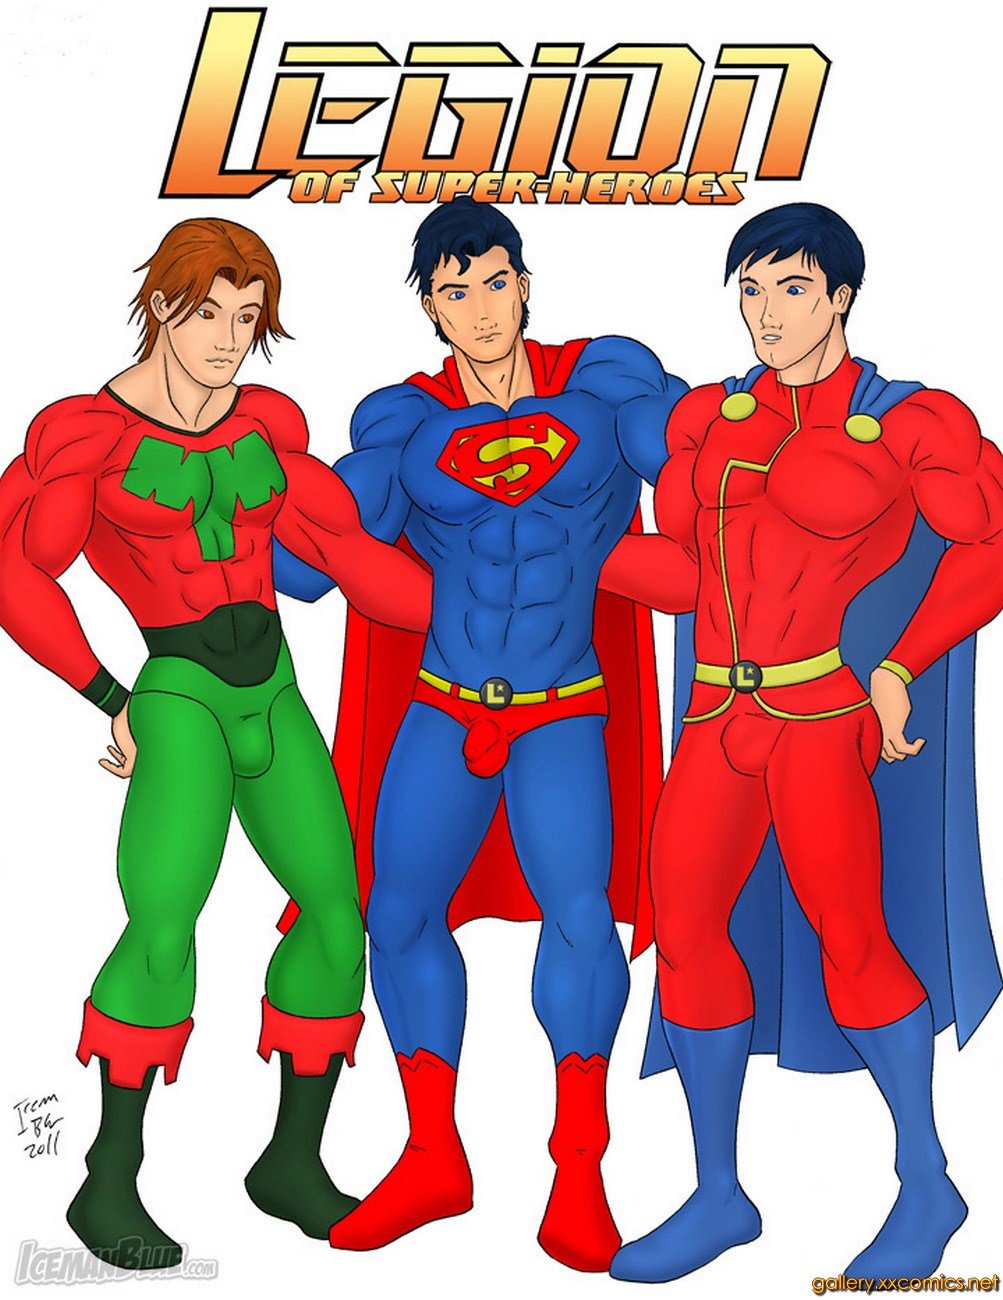 Legion-Of-Super-Heroes IcemanBlue Parody image 01